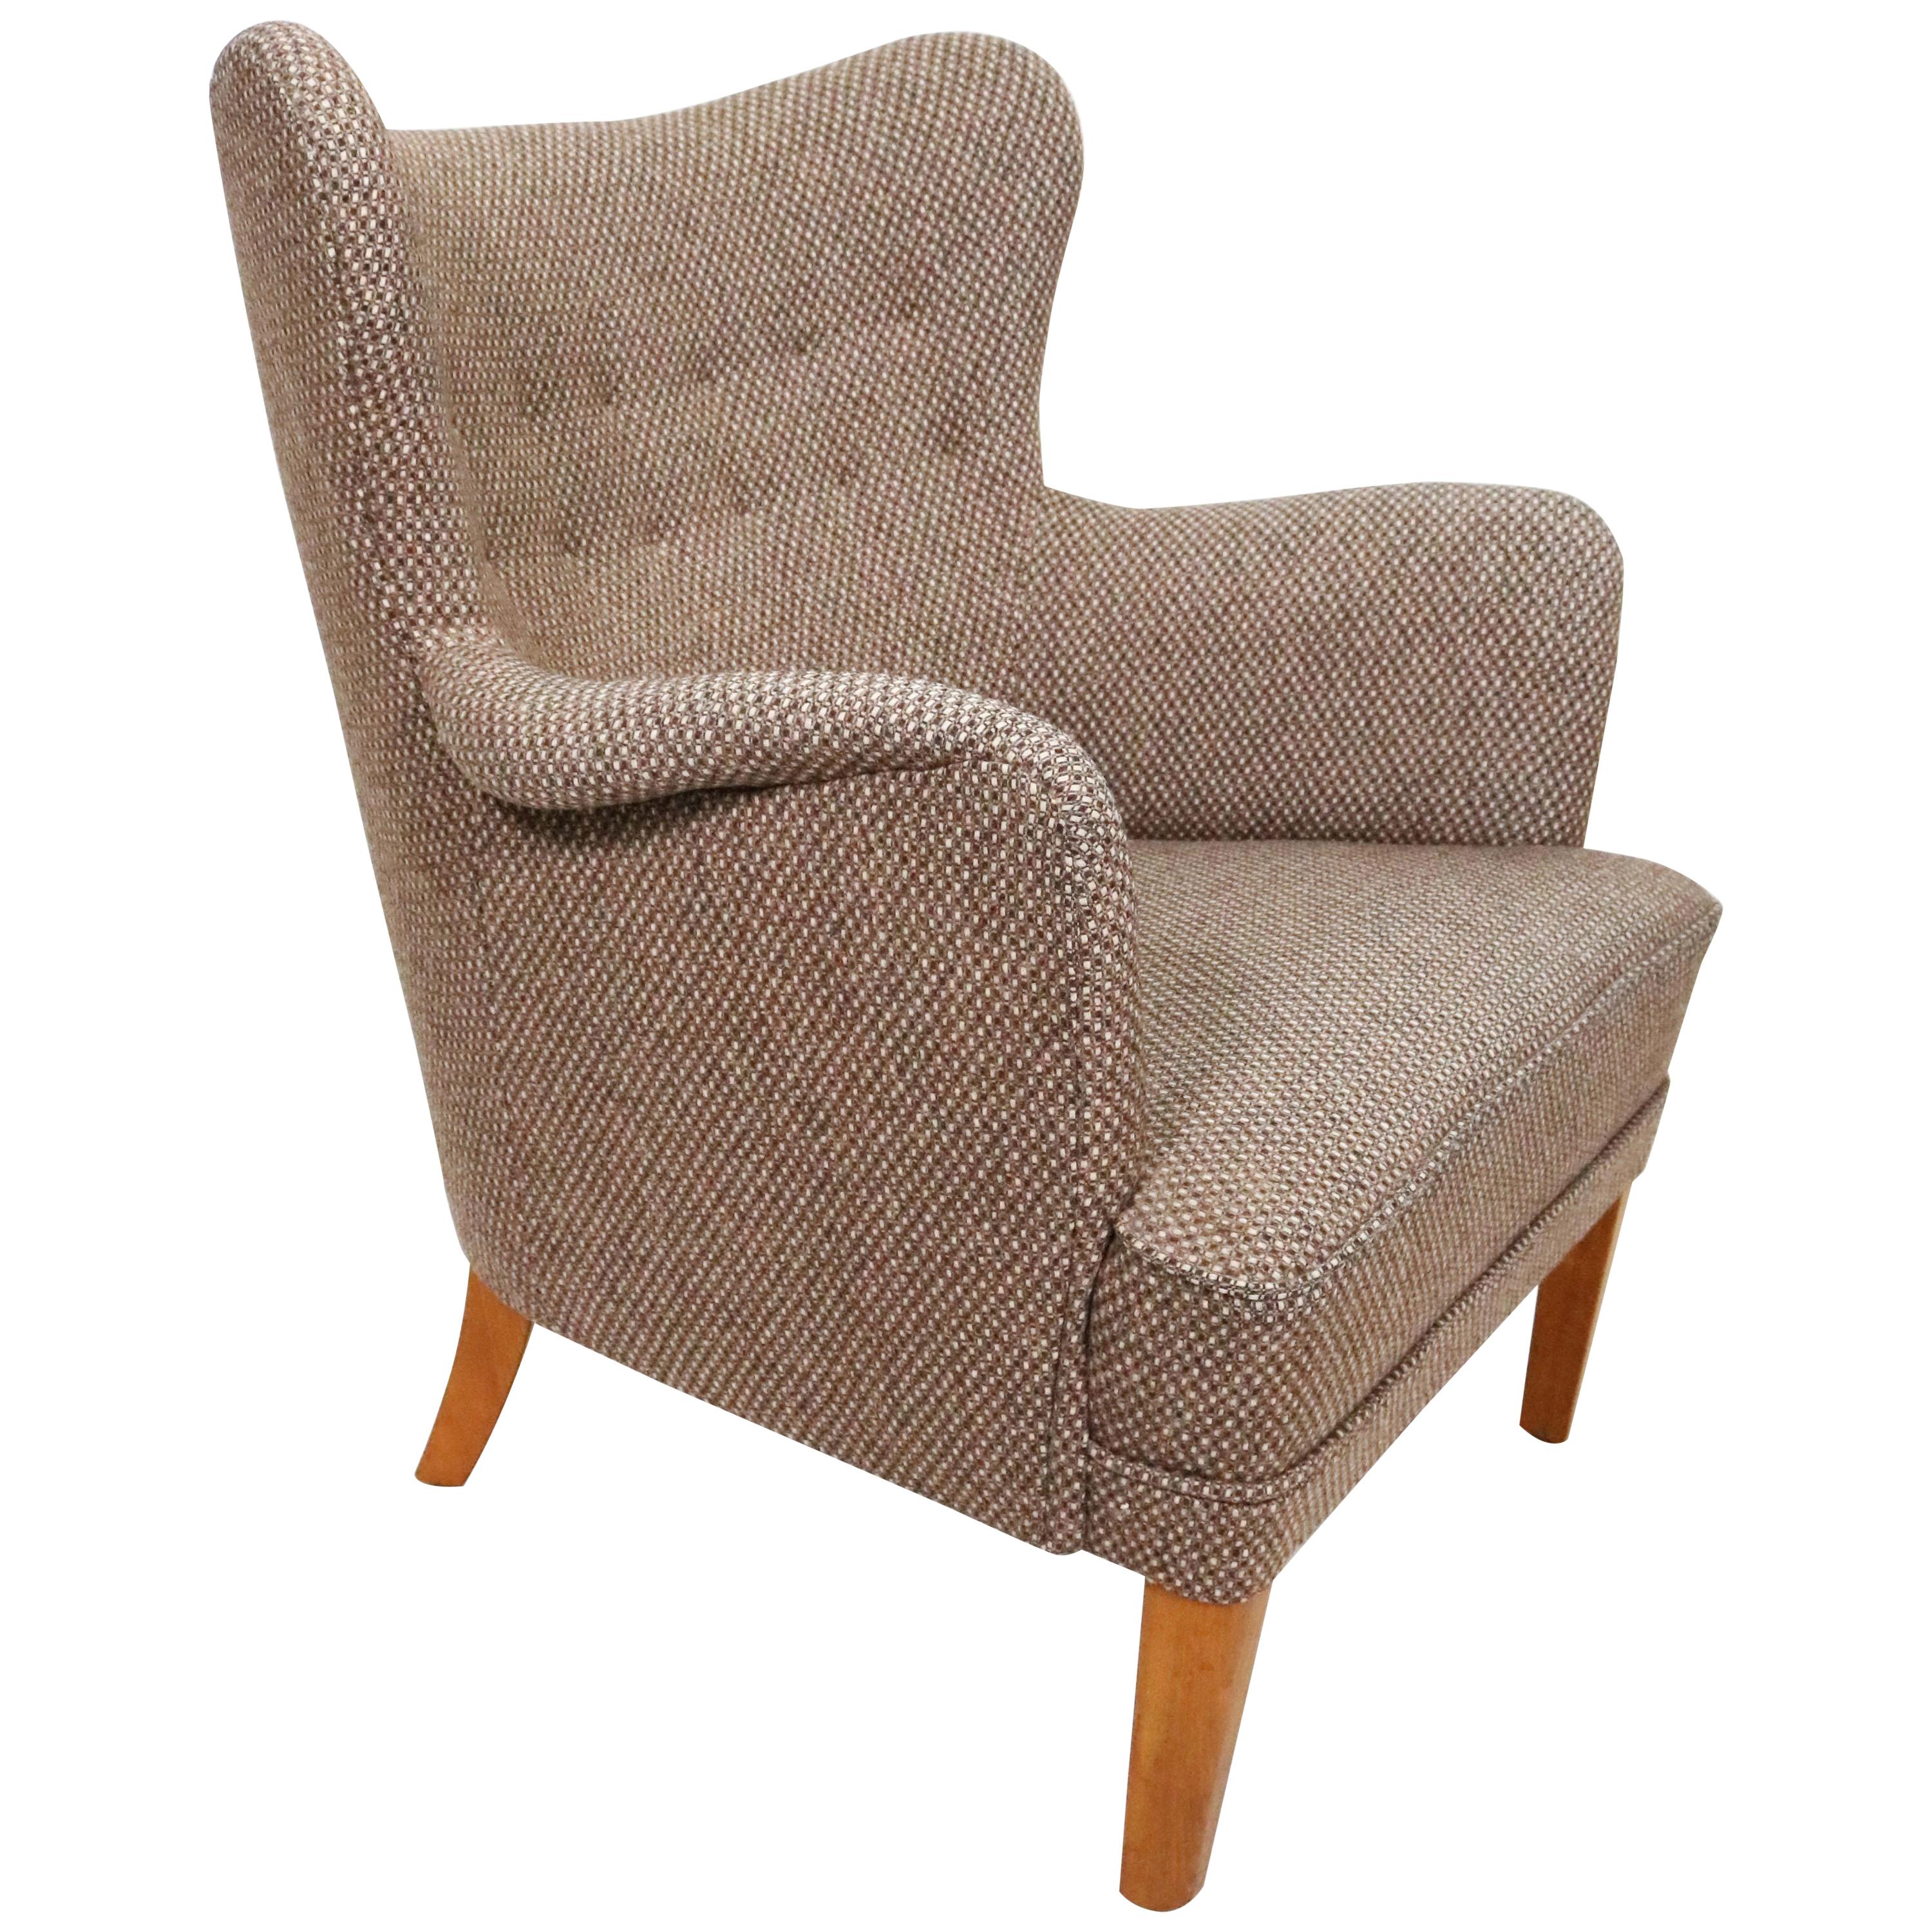 Scandinavian Modern Arm Chair in the Style of Carl Malmsten